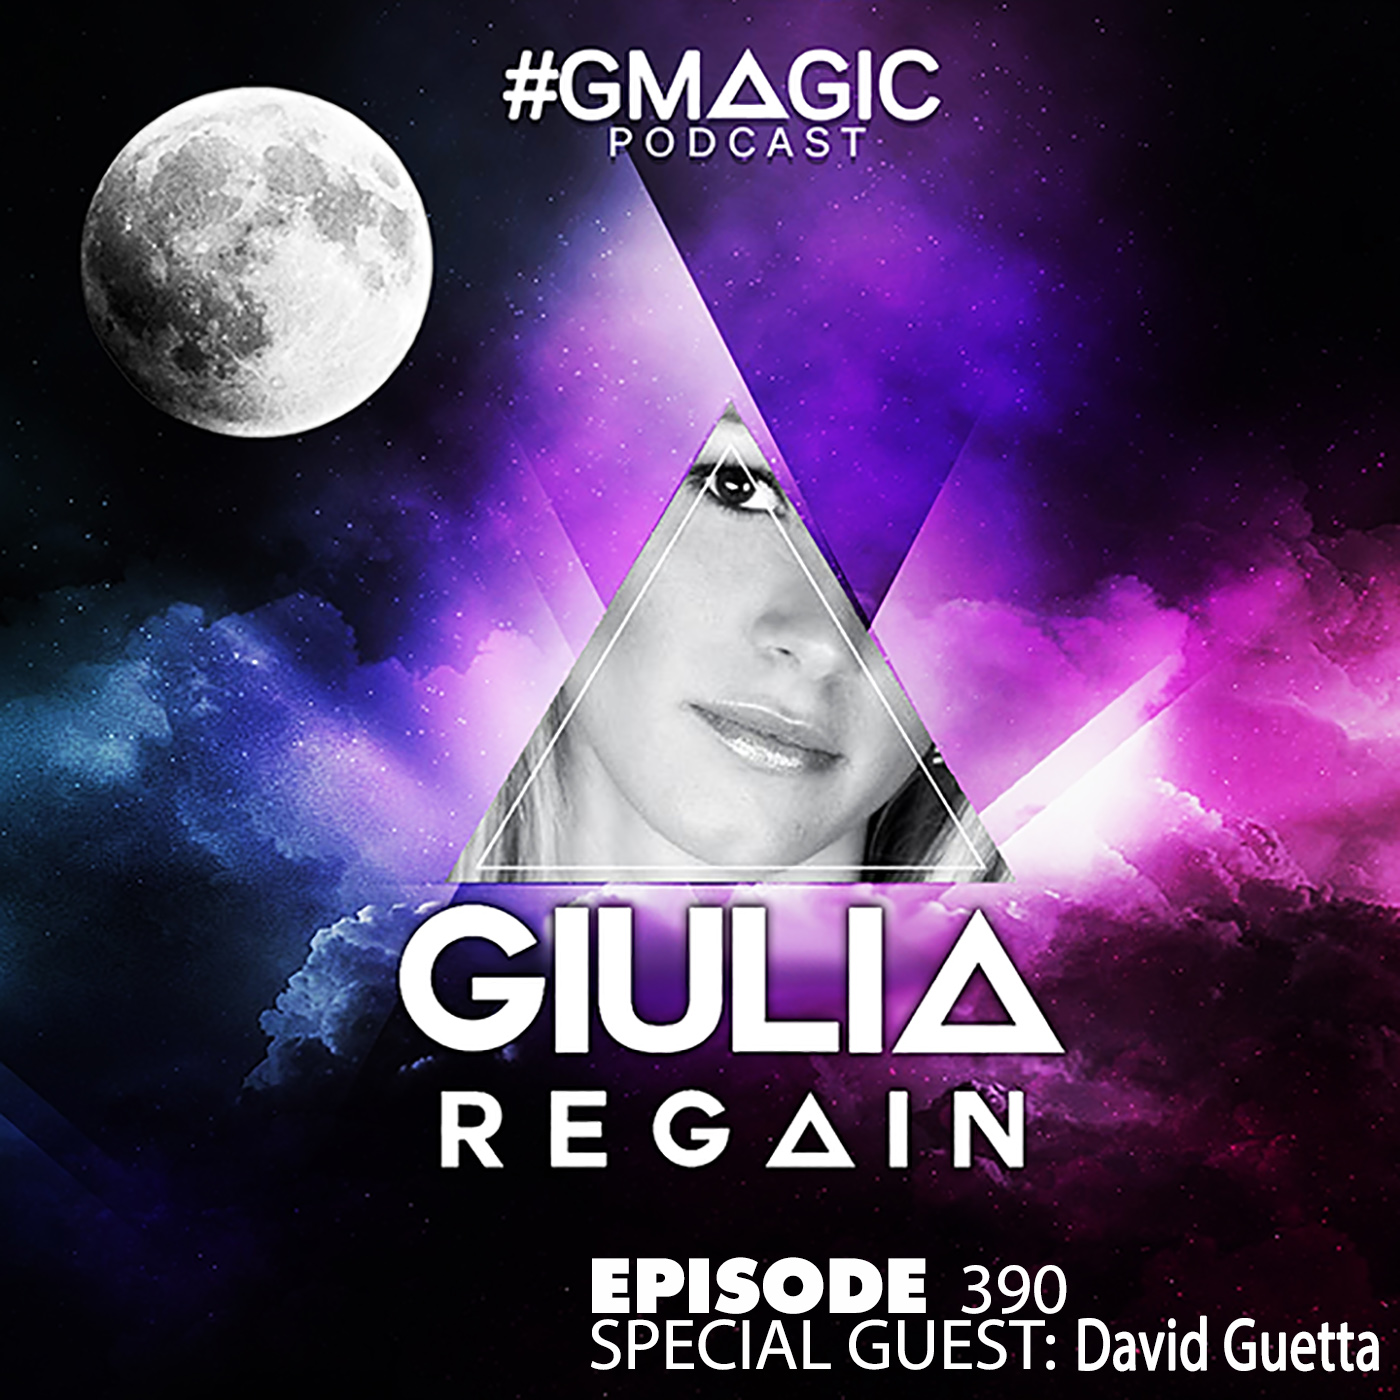 #Gmagic podcast 390-Special Guest: David Guetta